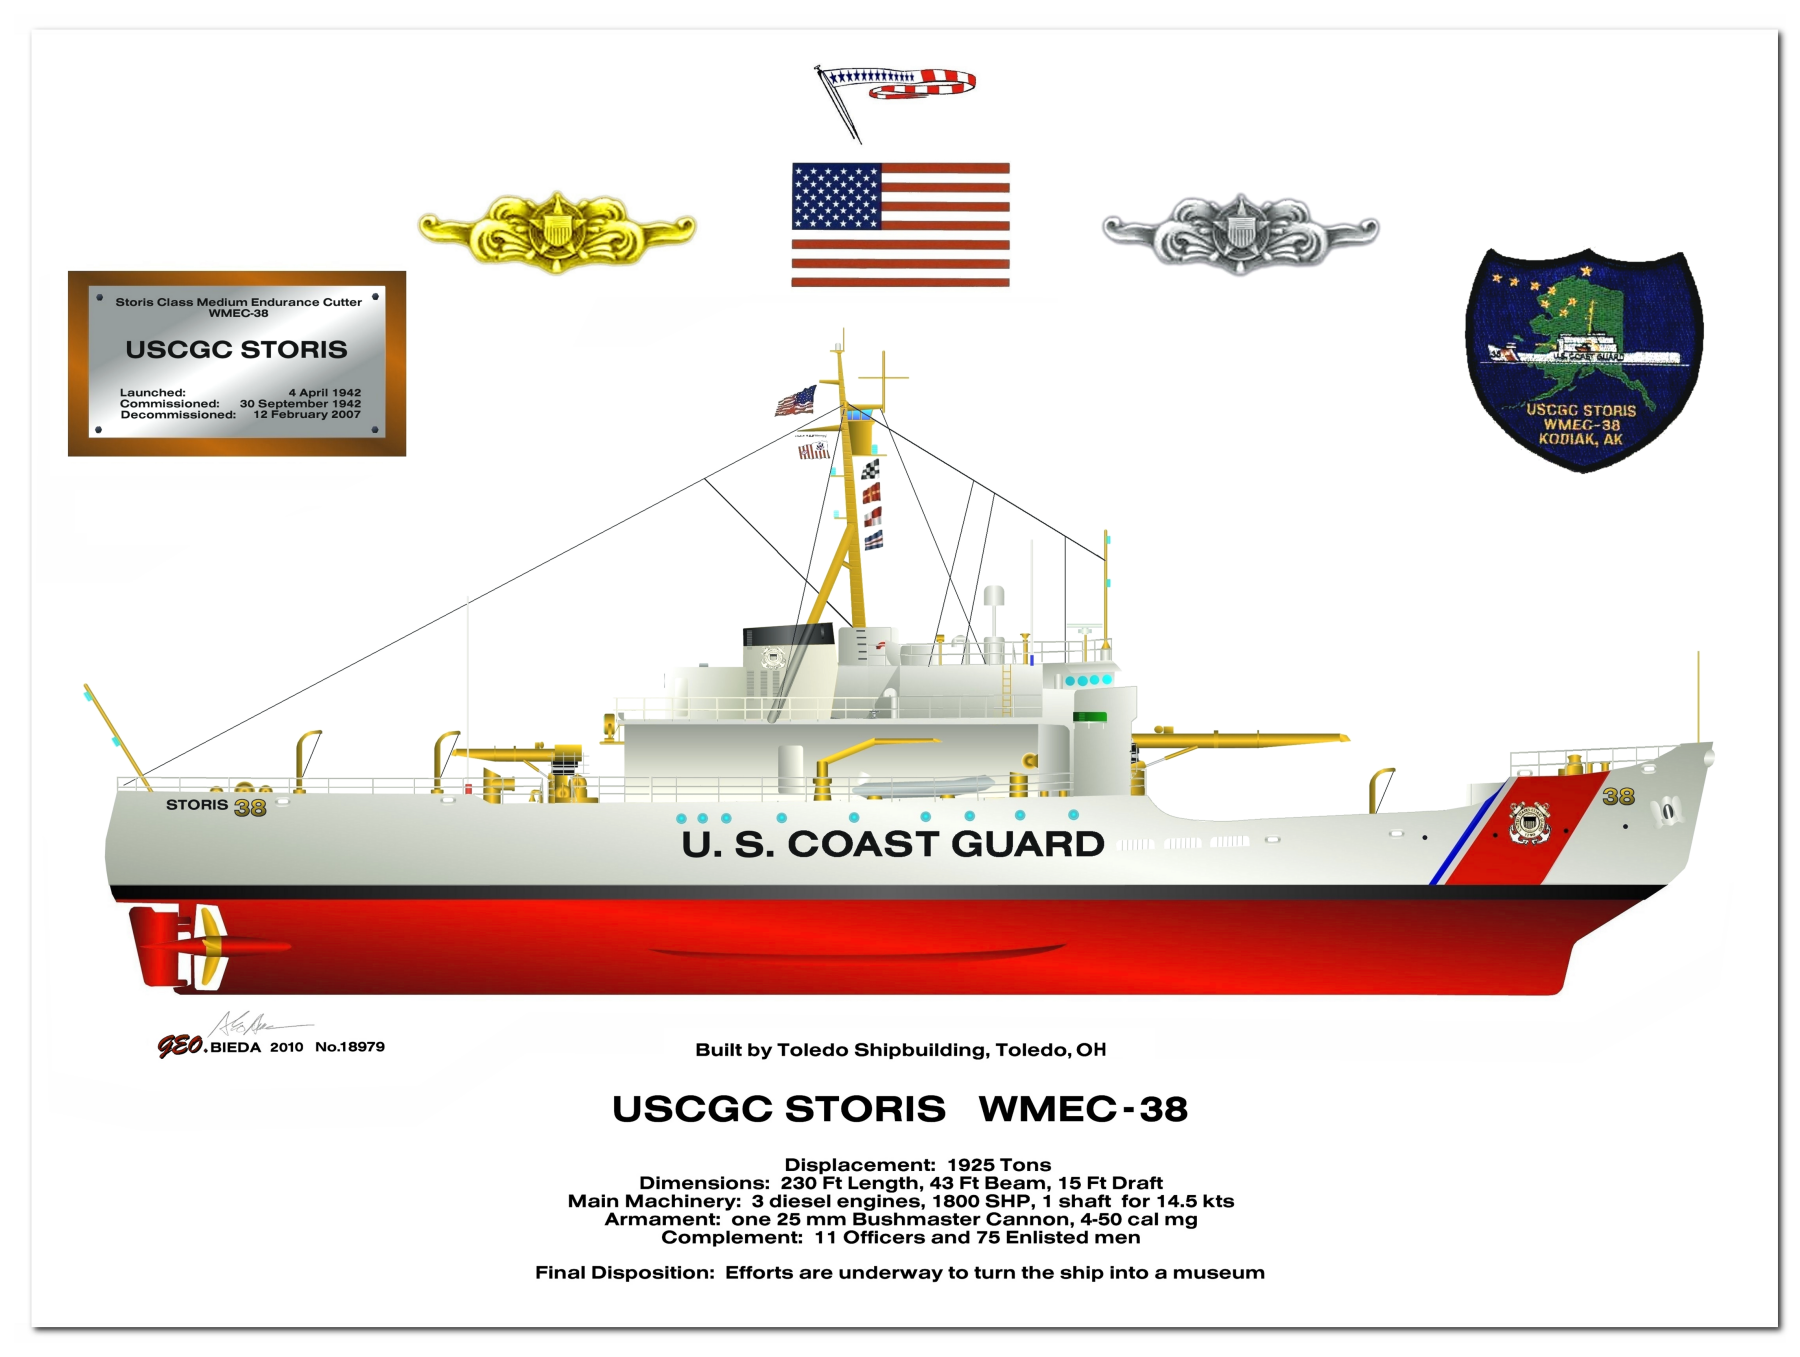 USCGC Storis WMEC 38 Icebreaker/Medium Endurance Cutter